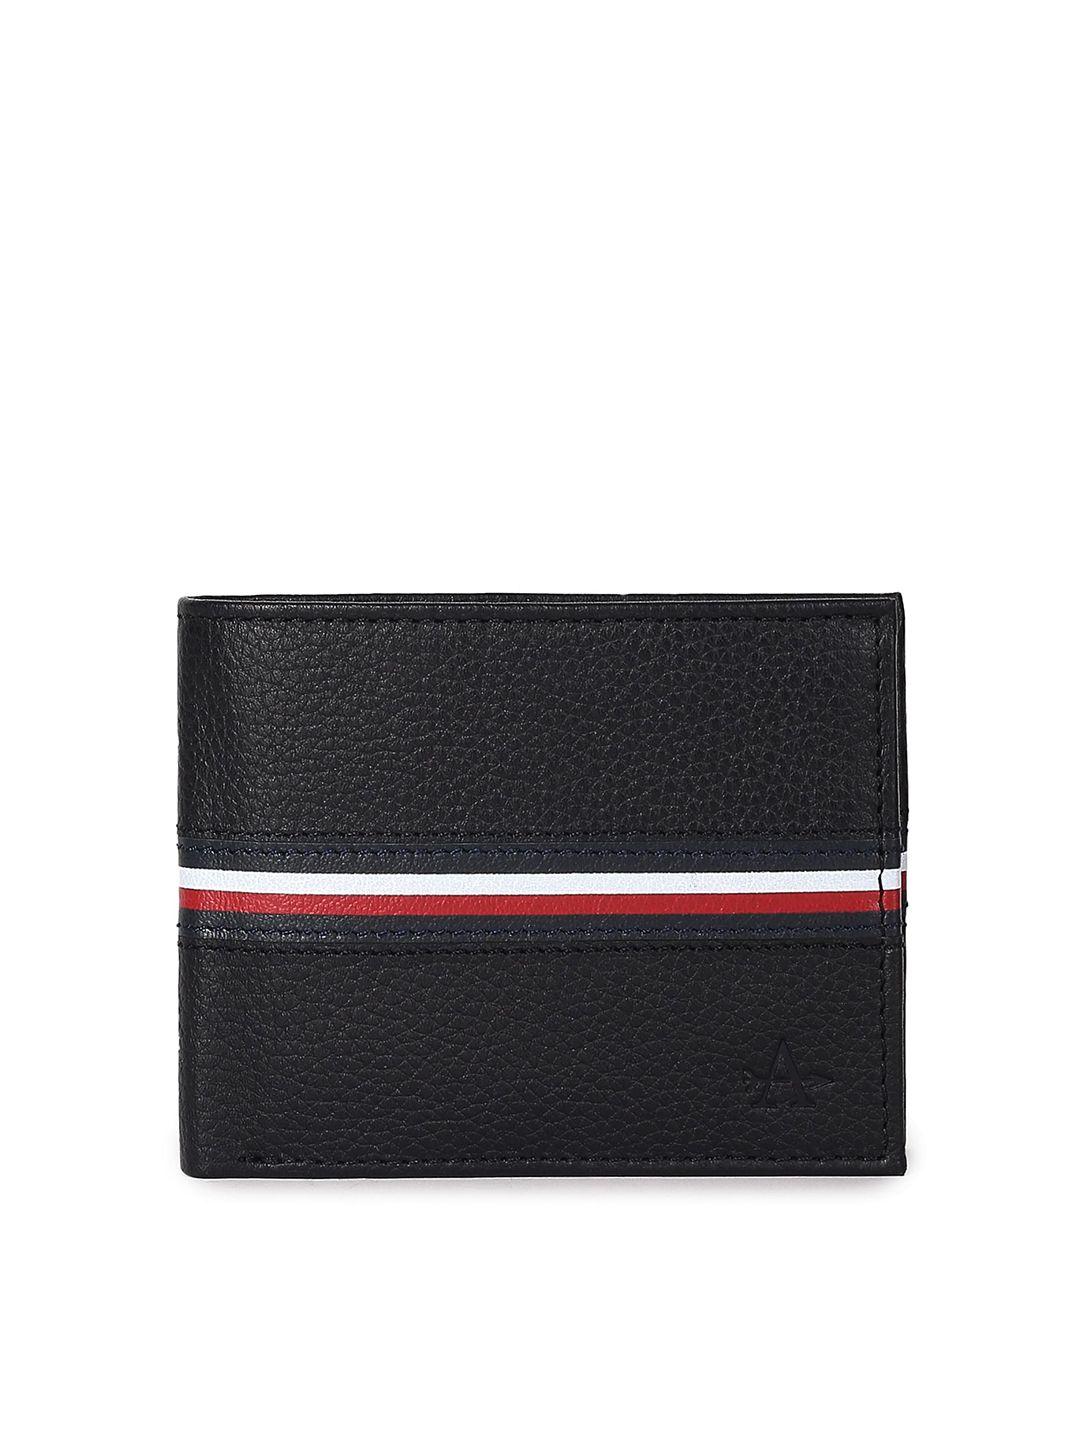 arrow men black & white striped leather two fold wallet